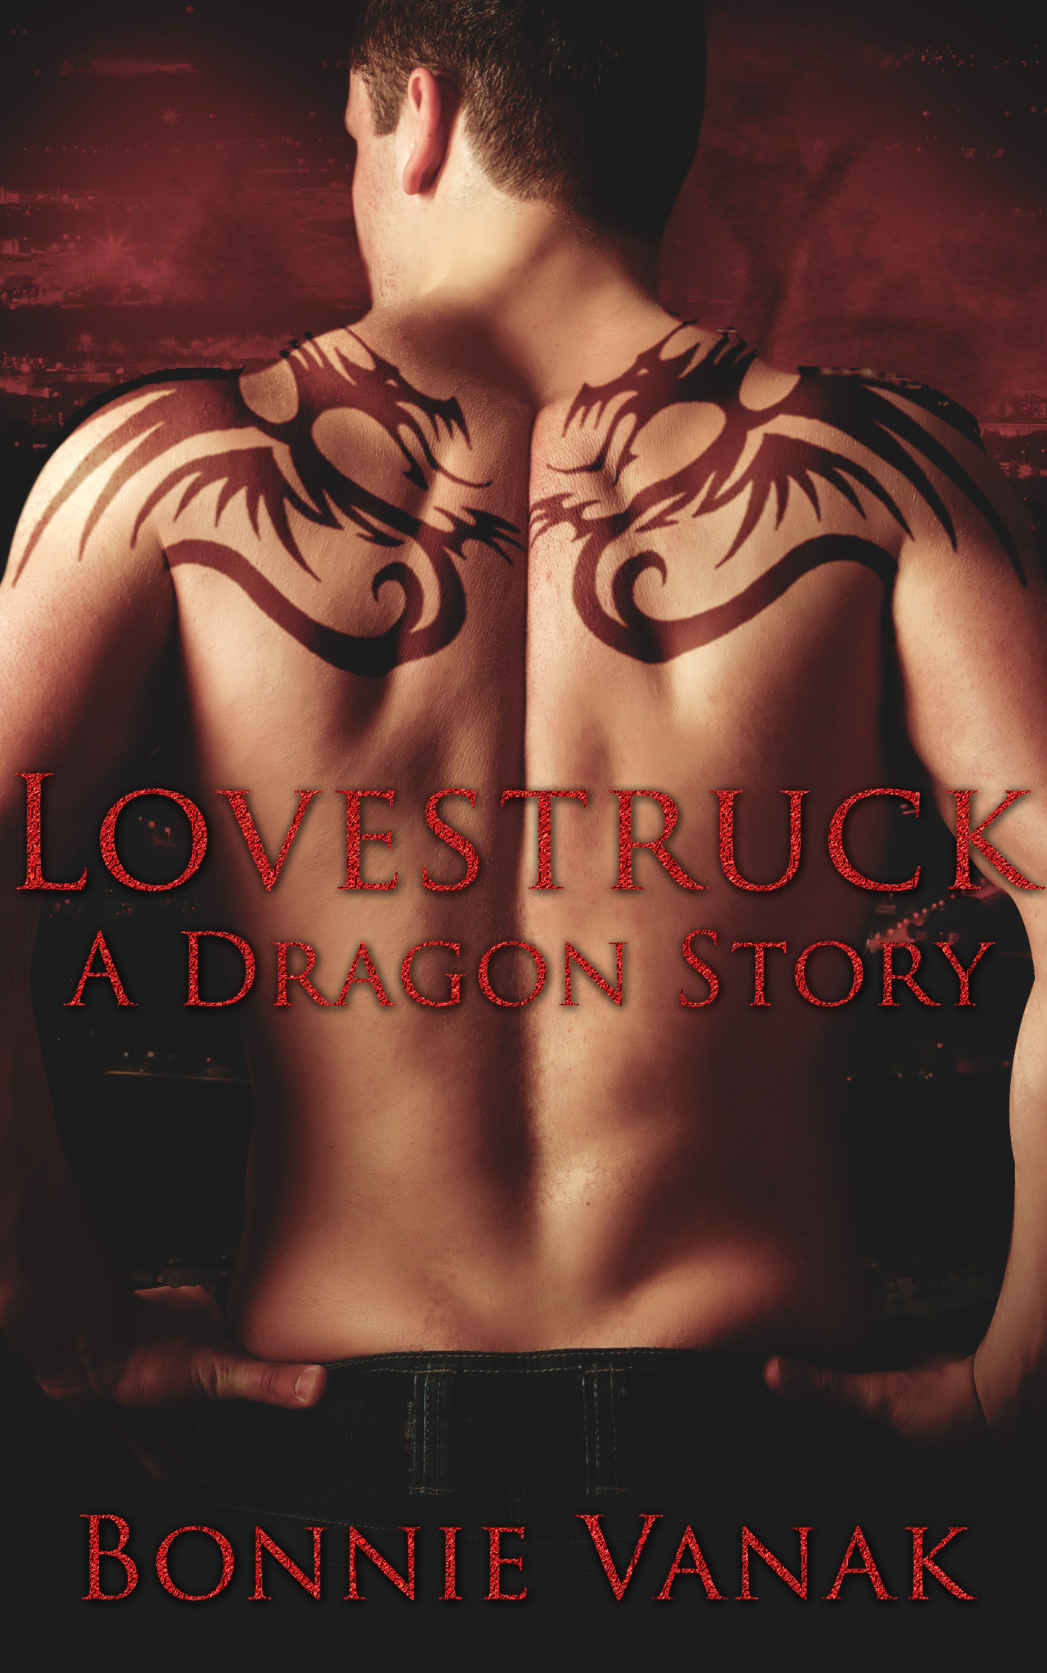 Lovestruck, a Dragon Story